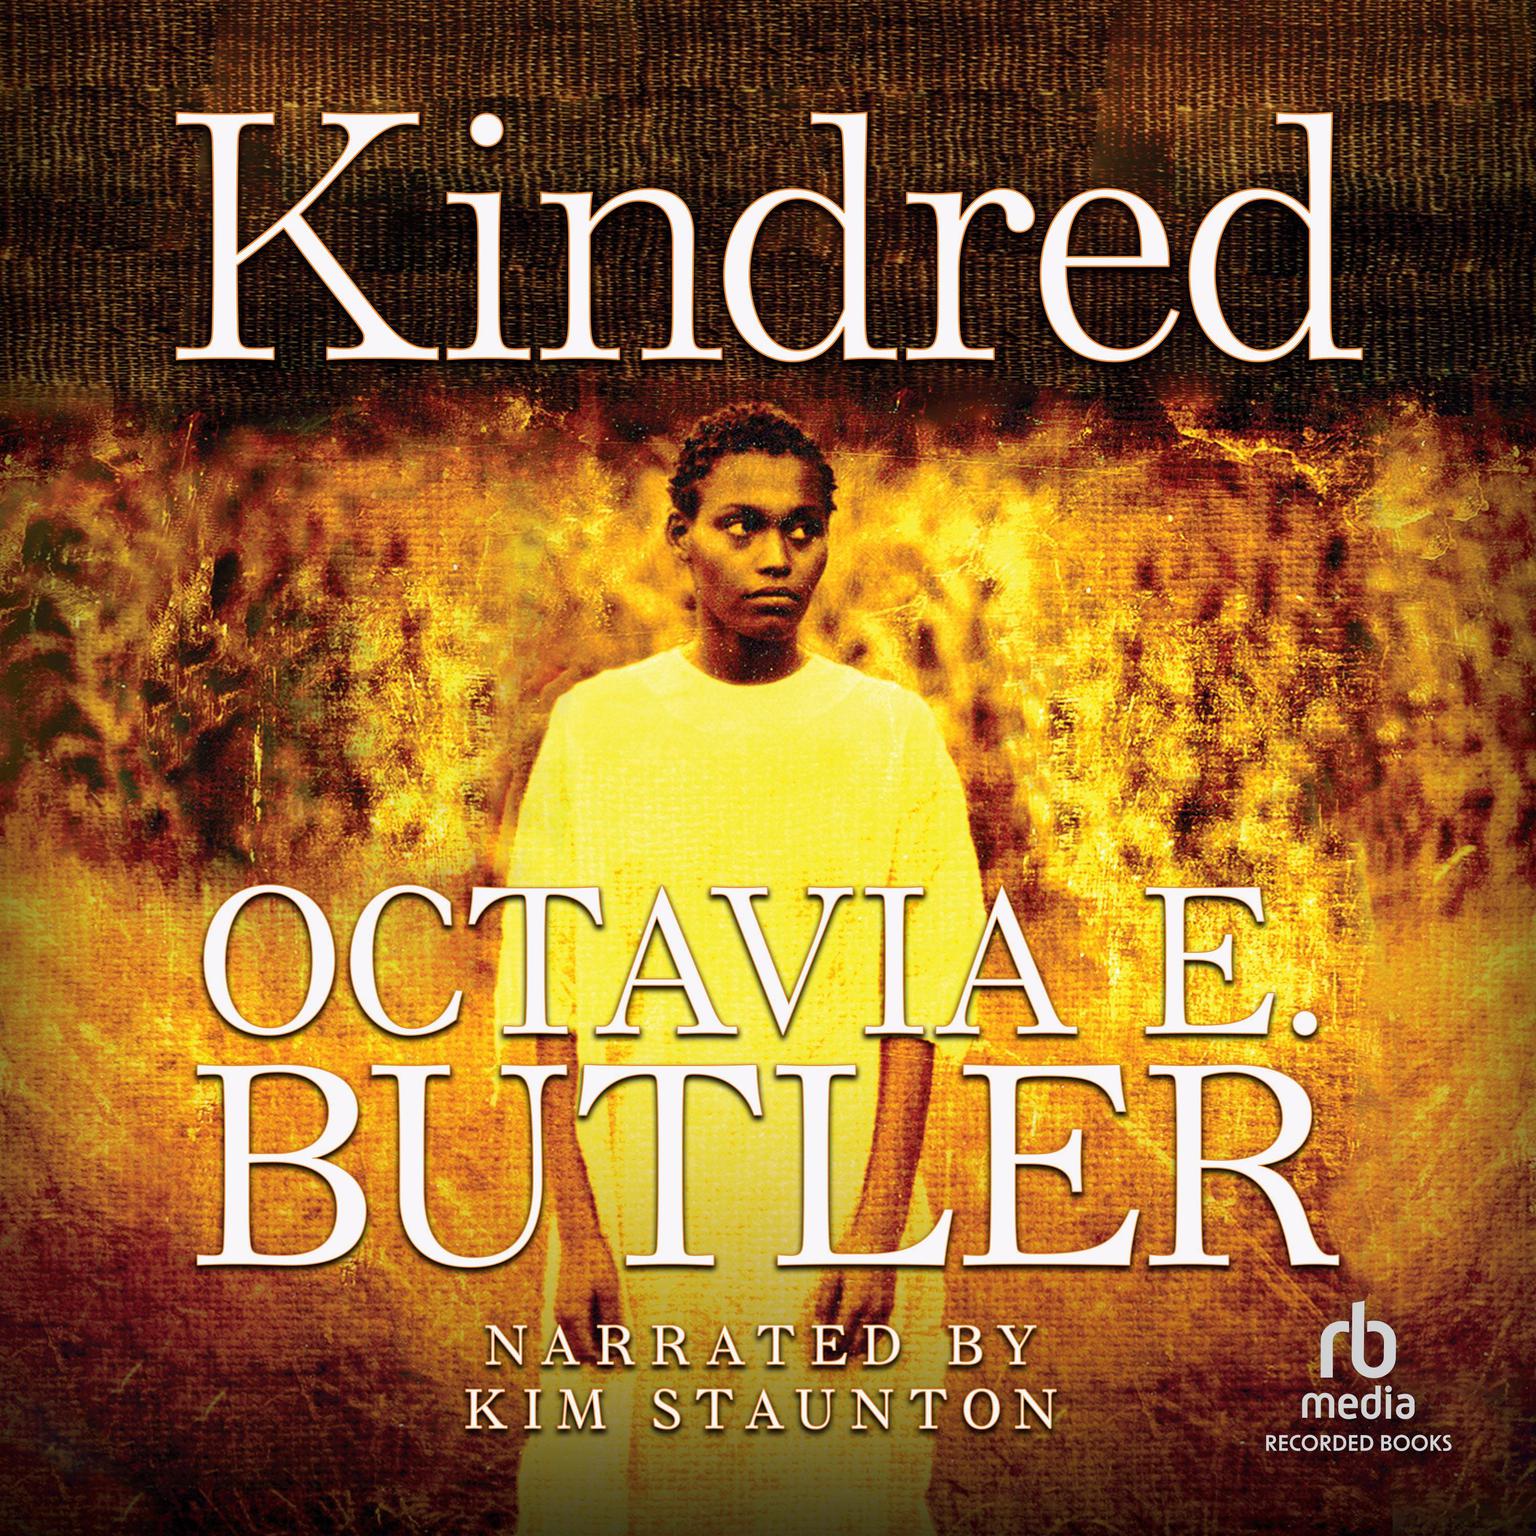 kindred by octavia e butler pdf